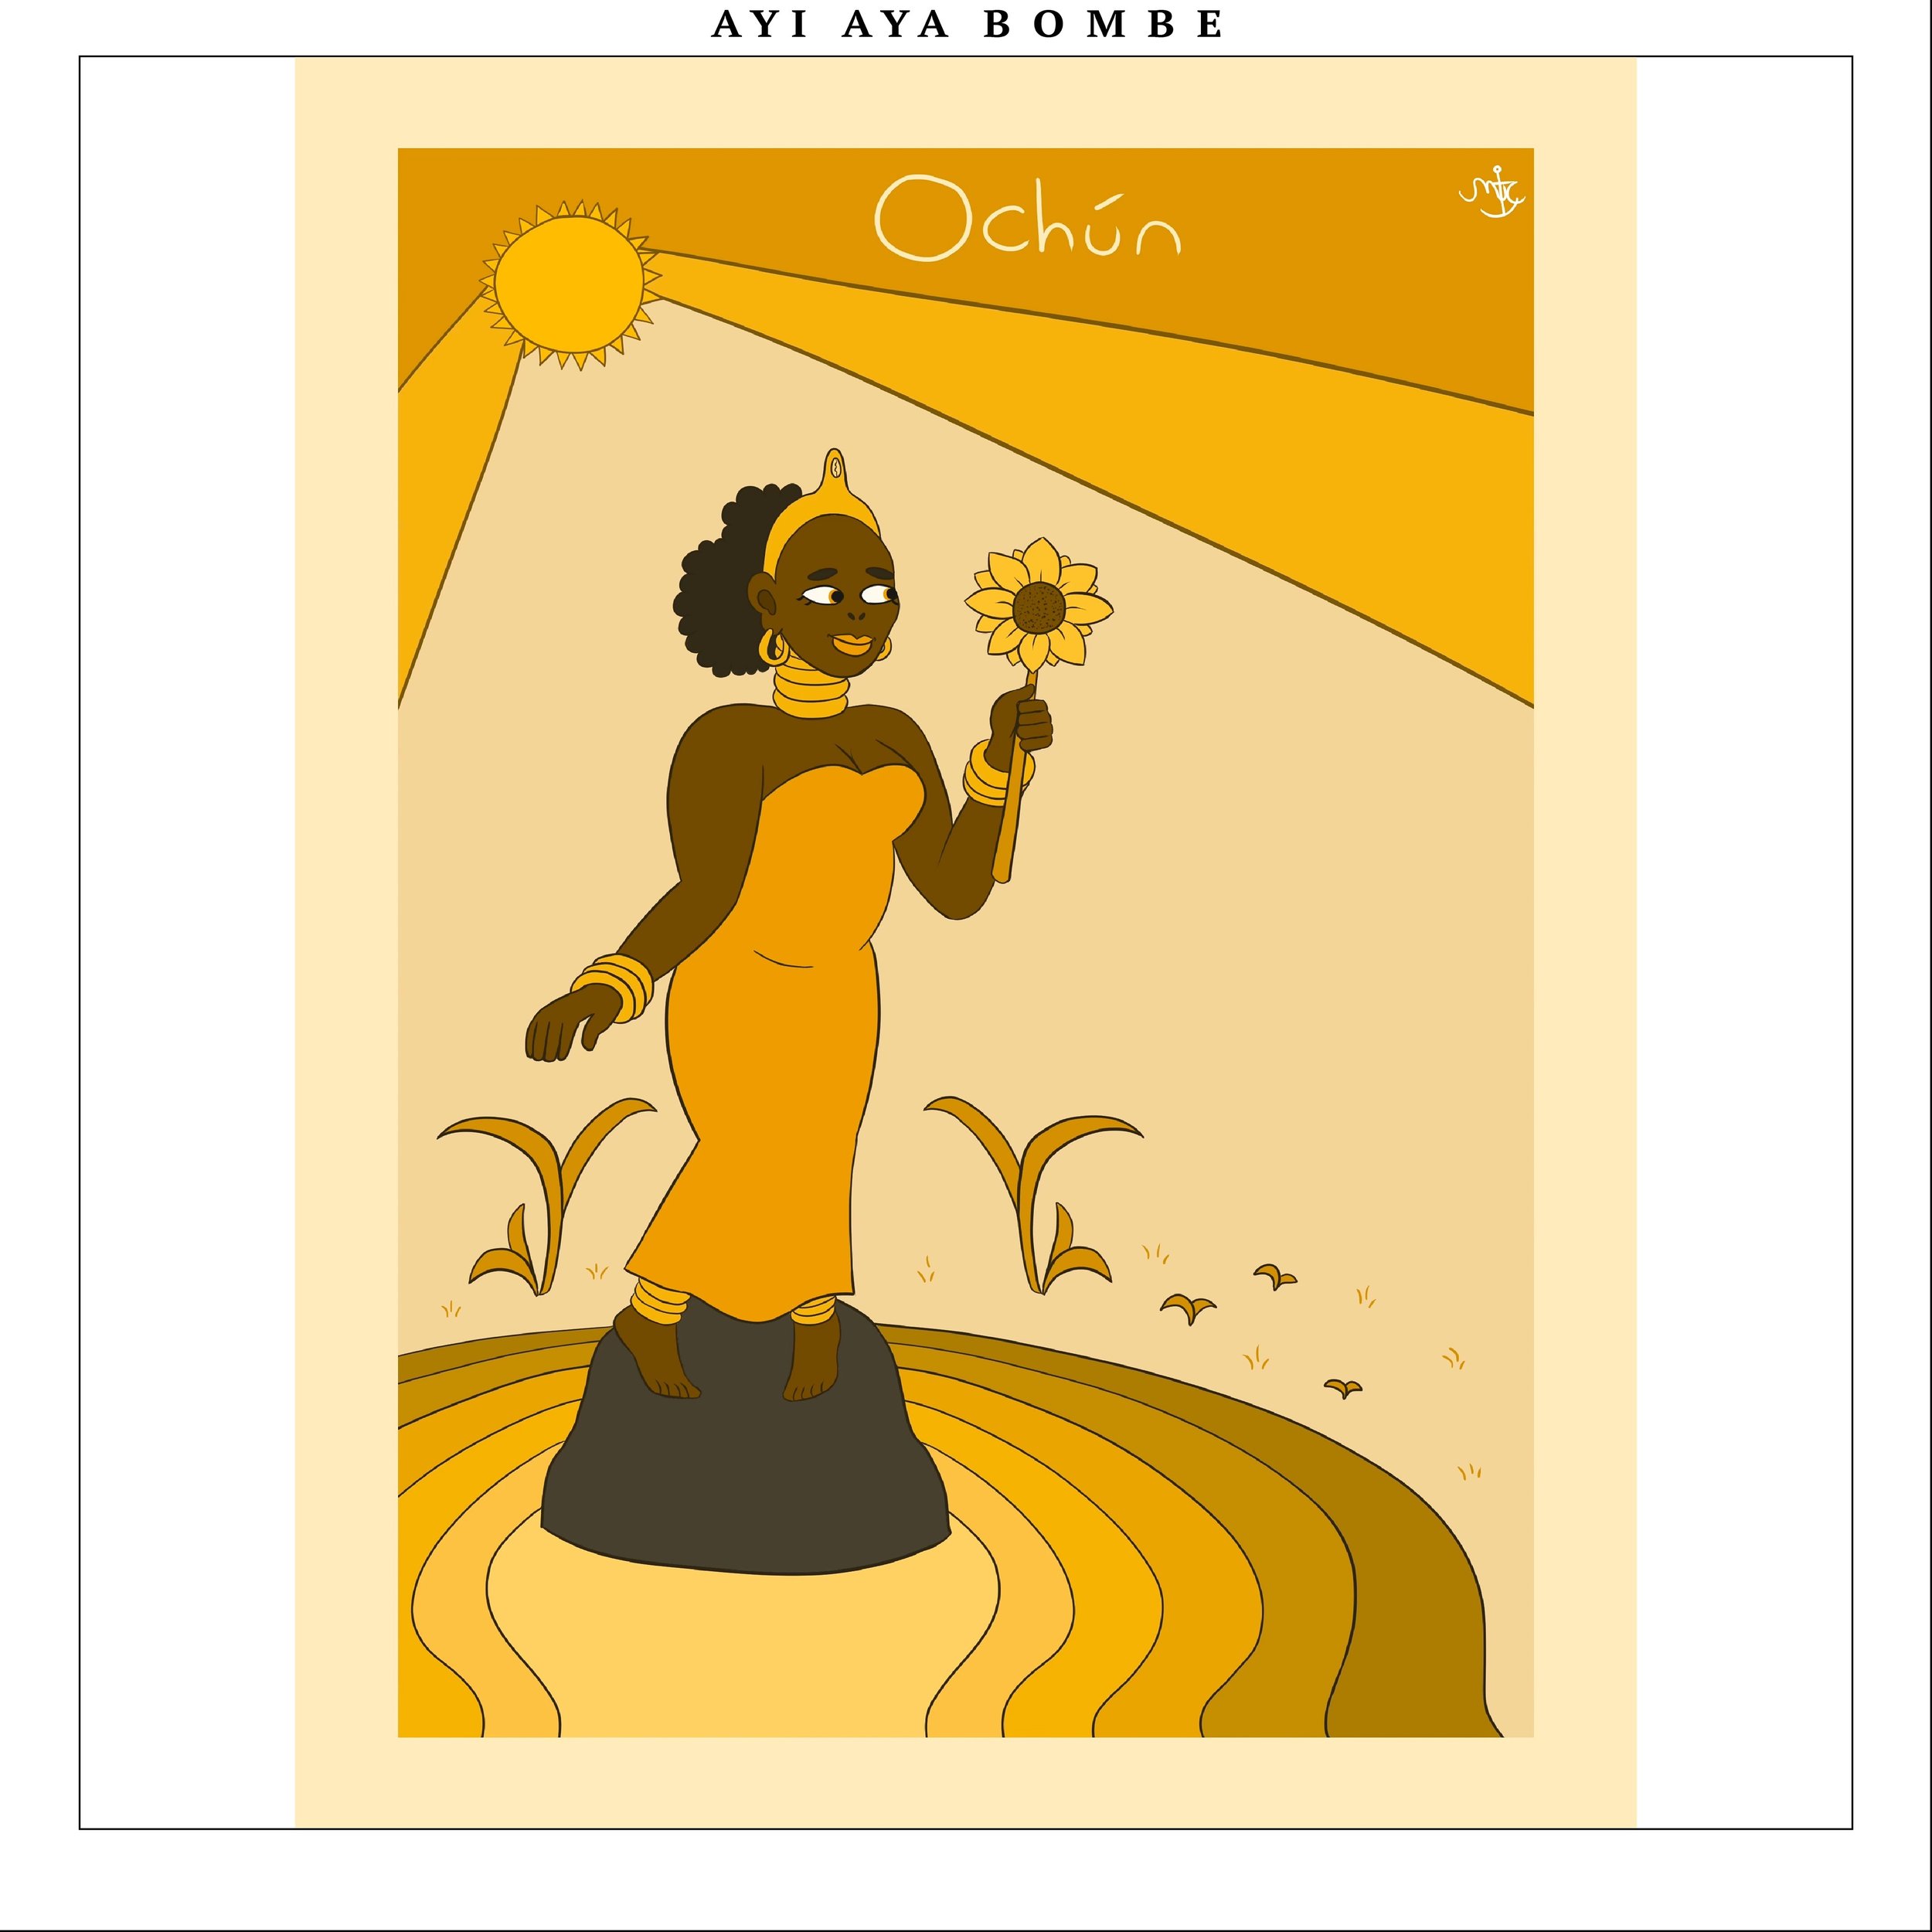 Och&uacute;n 💛🐝🦜
Art by Madamo Juli&aacute;n Congo.

View the full piece and others at AyiAyaBombe.com
[Shop and prints coming soon!]
 
#Ochun #Oshun #Afrocaribe&ntilde;o #Illustrator #ClipStudioPaint #OchaIfa #BlackArt